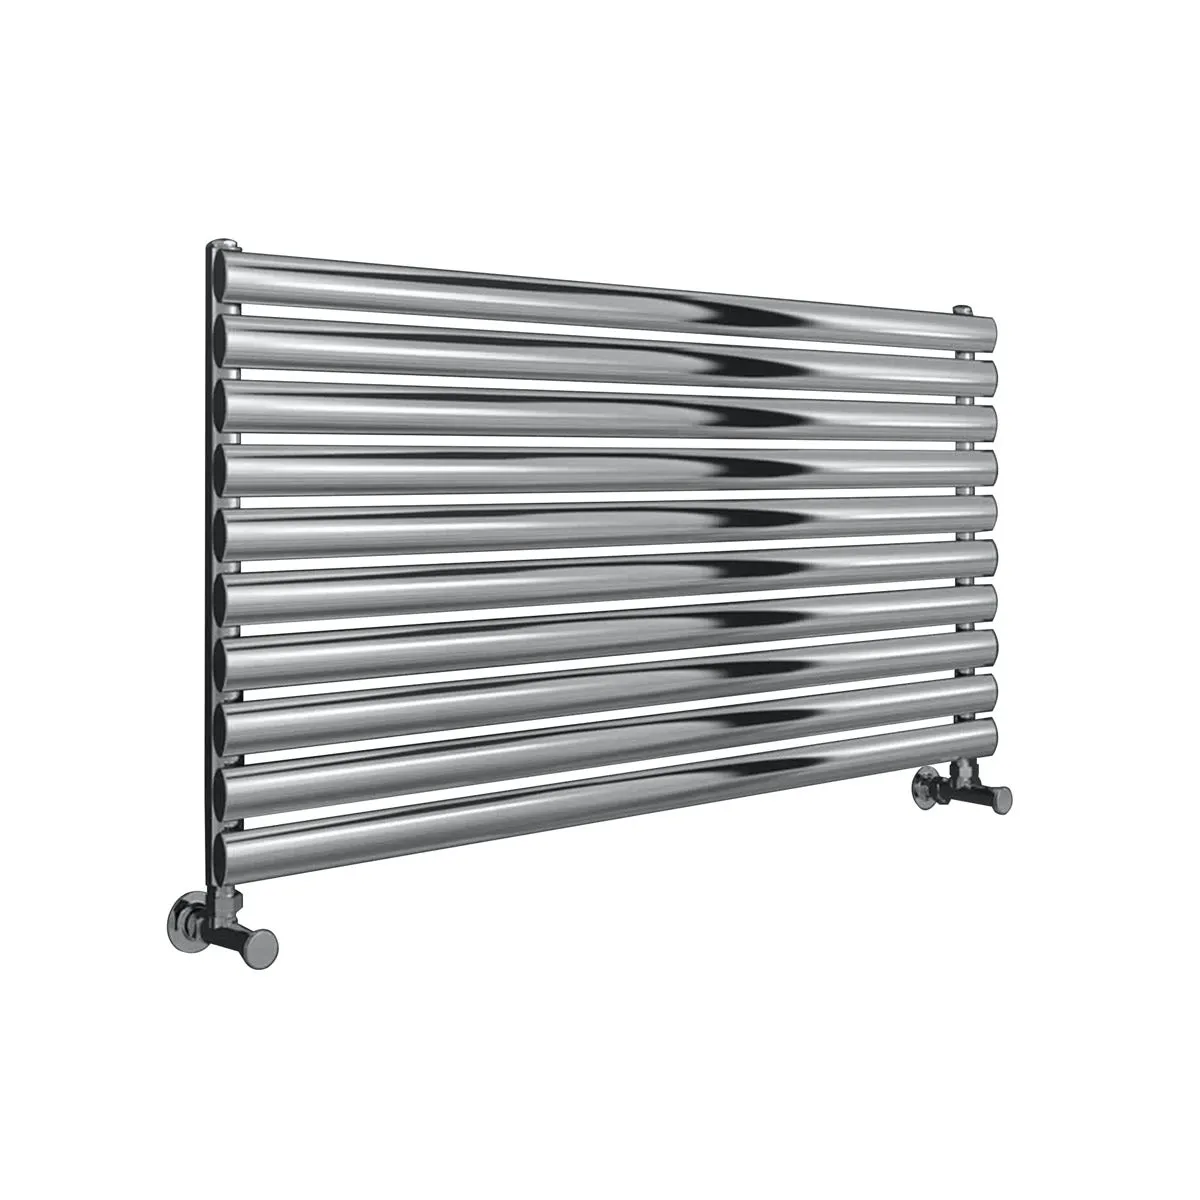 Reina Artena single polished stainless steel designer radiator